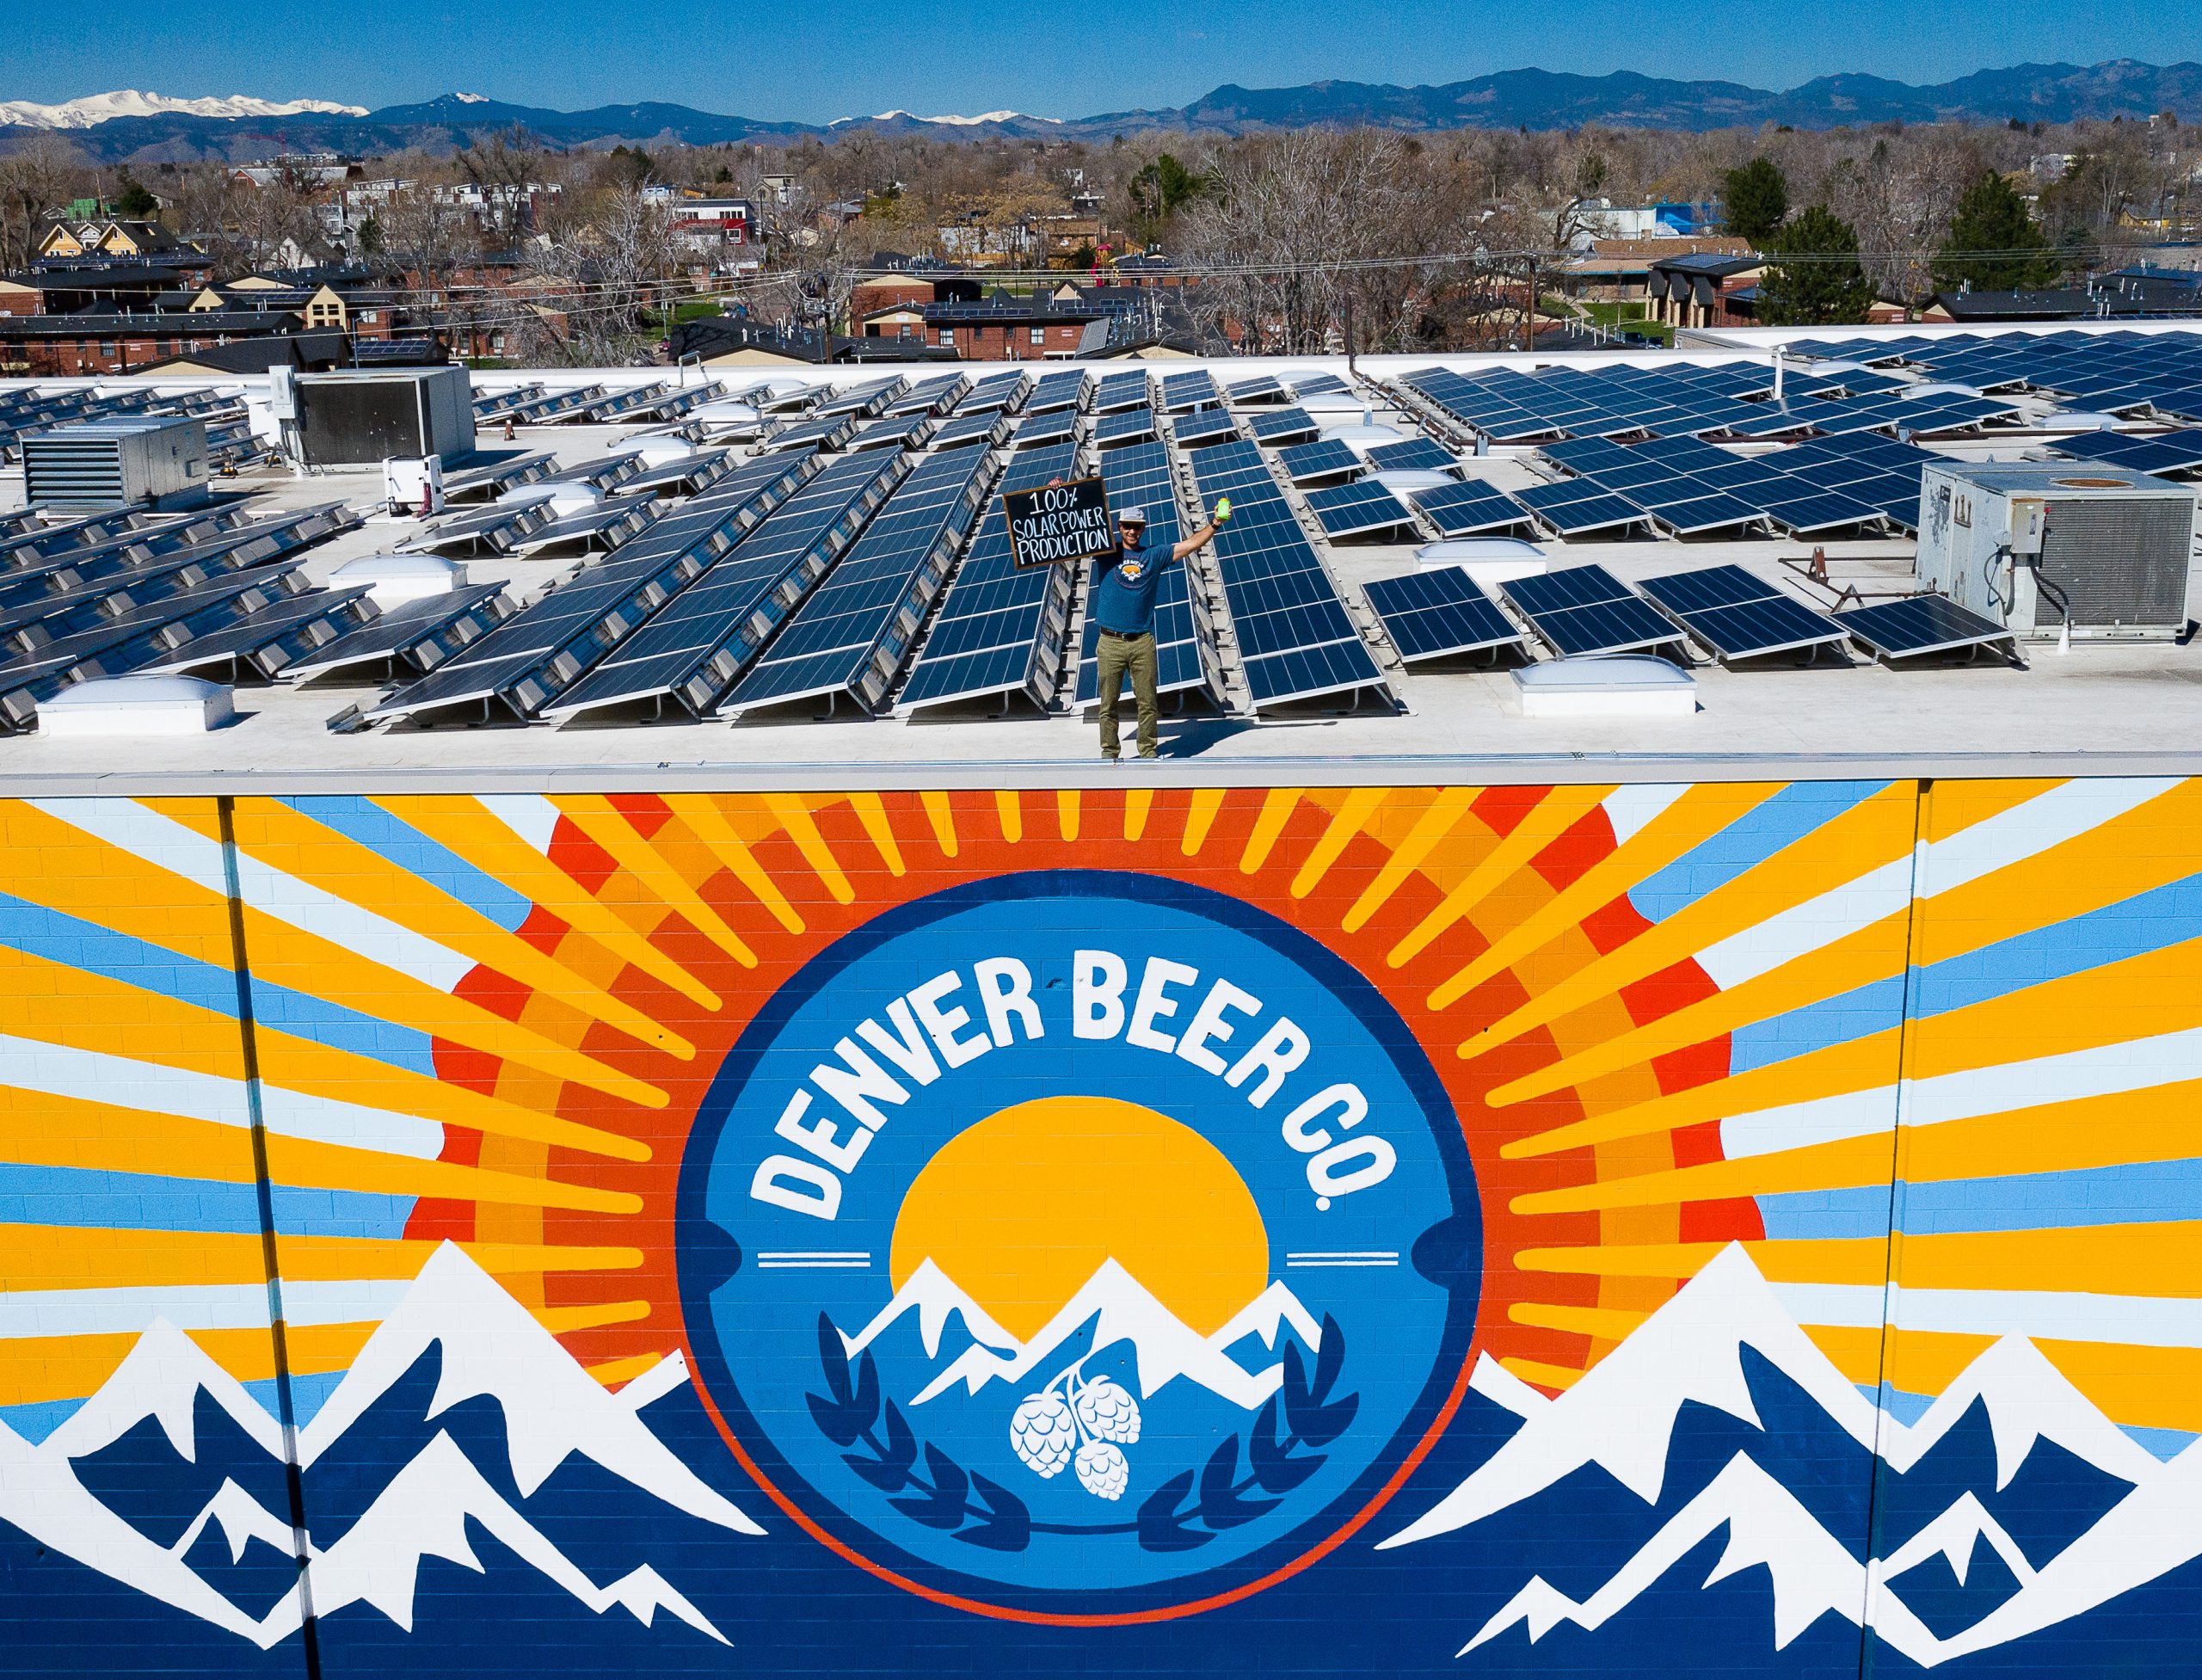 Overhead photo of solar installation on Denver Beer Company